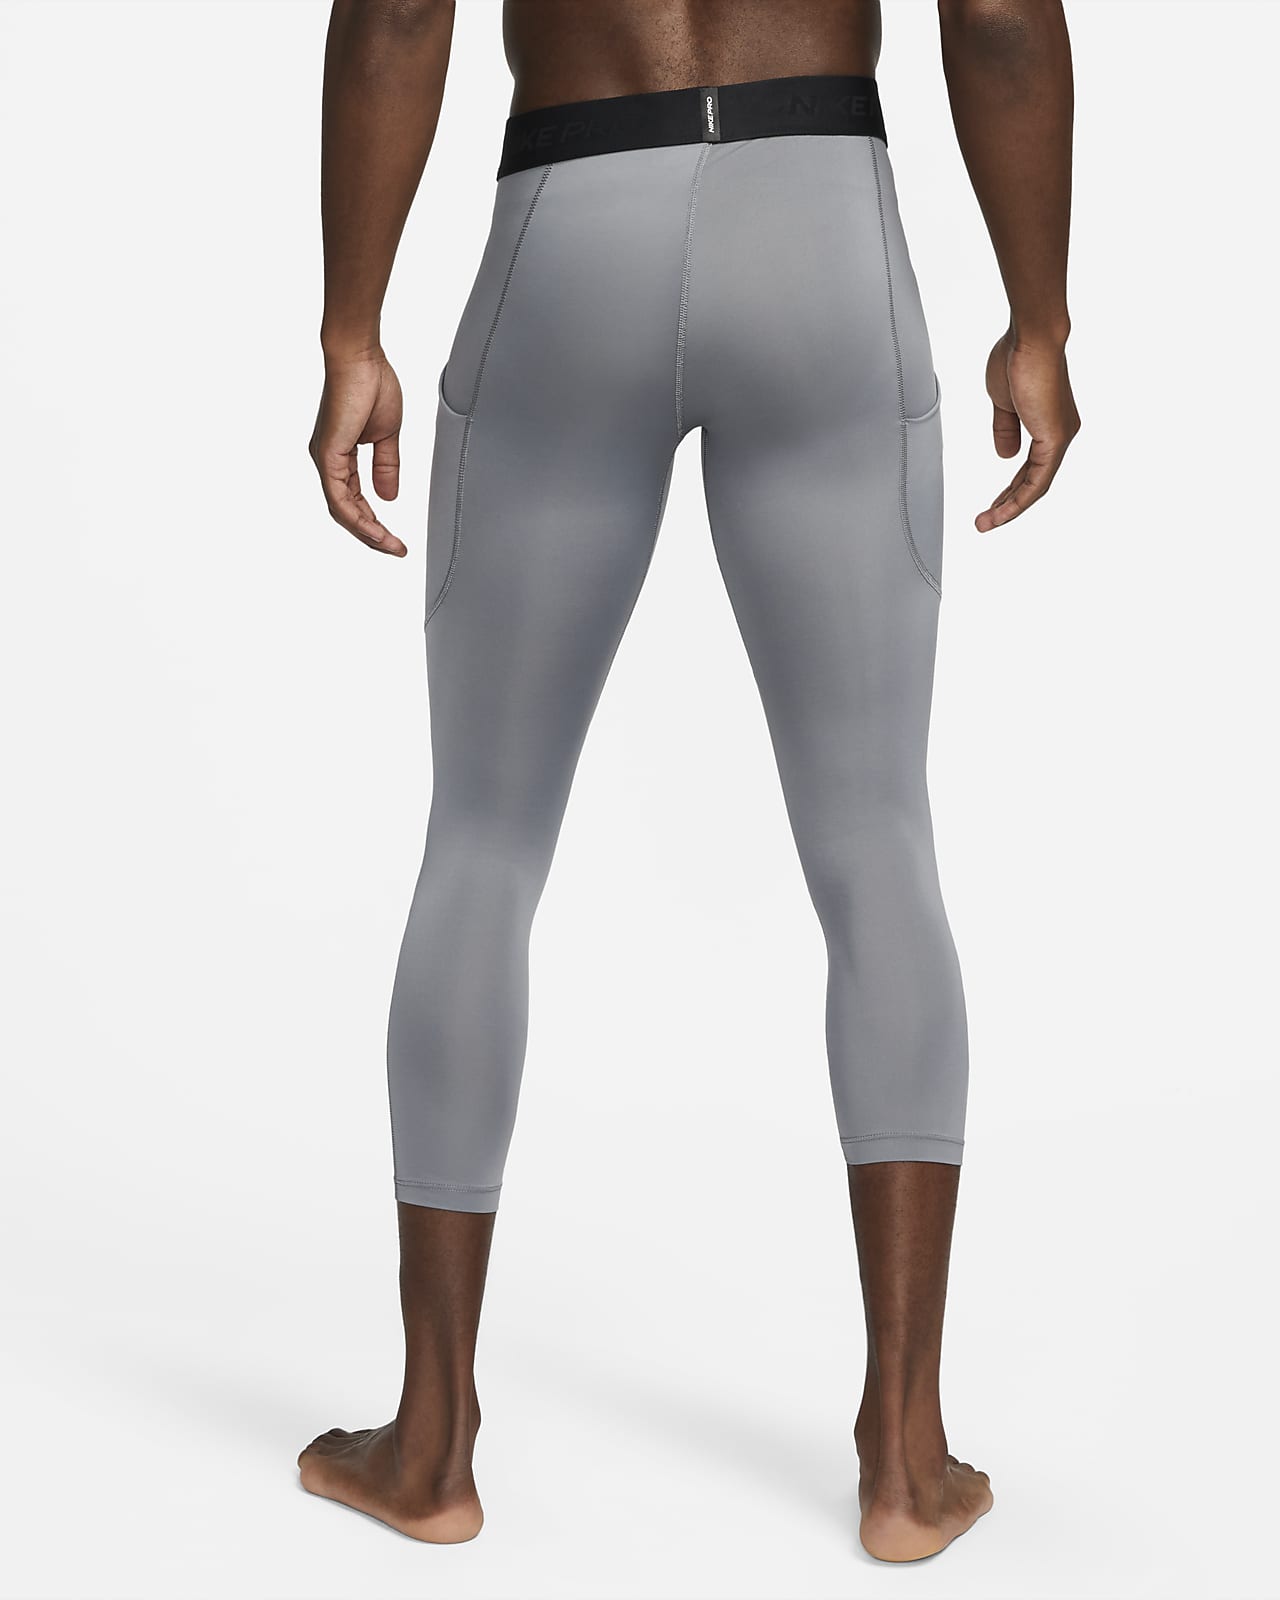 Nike Men's Pro Dri-Fit 3/4 Length Training Tights, White/Black, Medium :  : Clothing, Shoes & Accessories